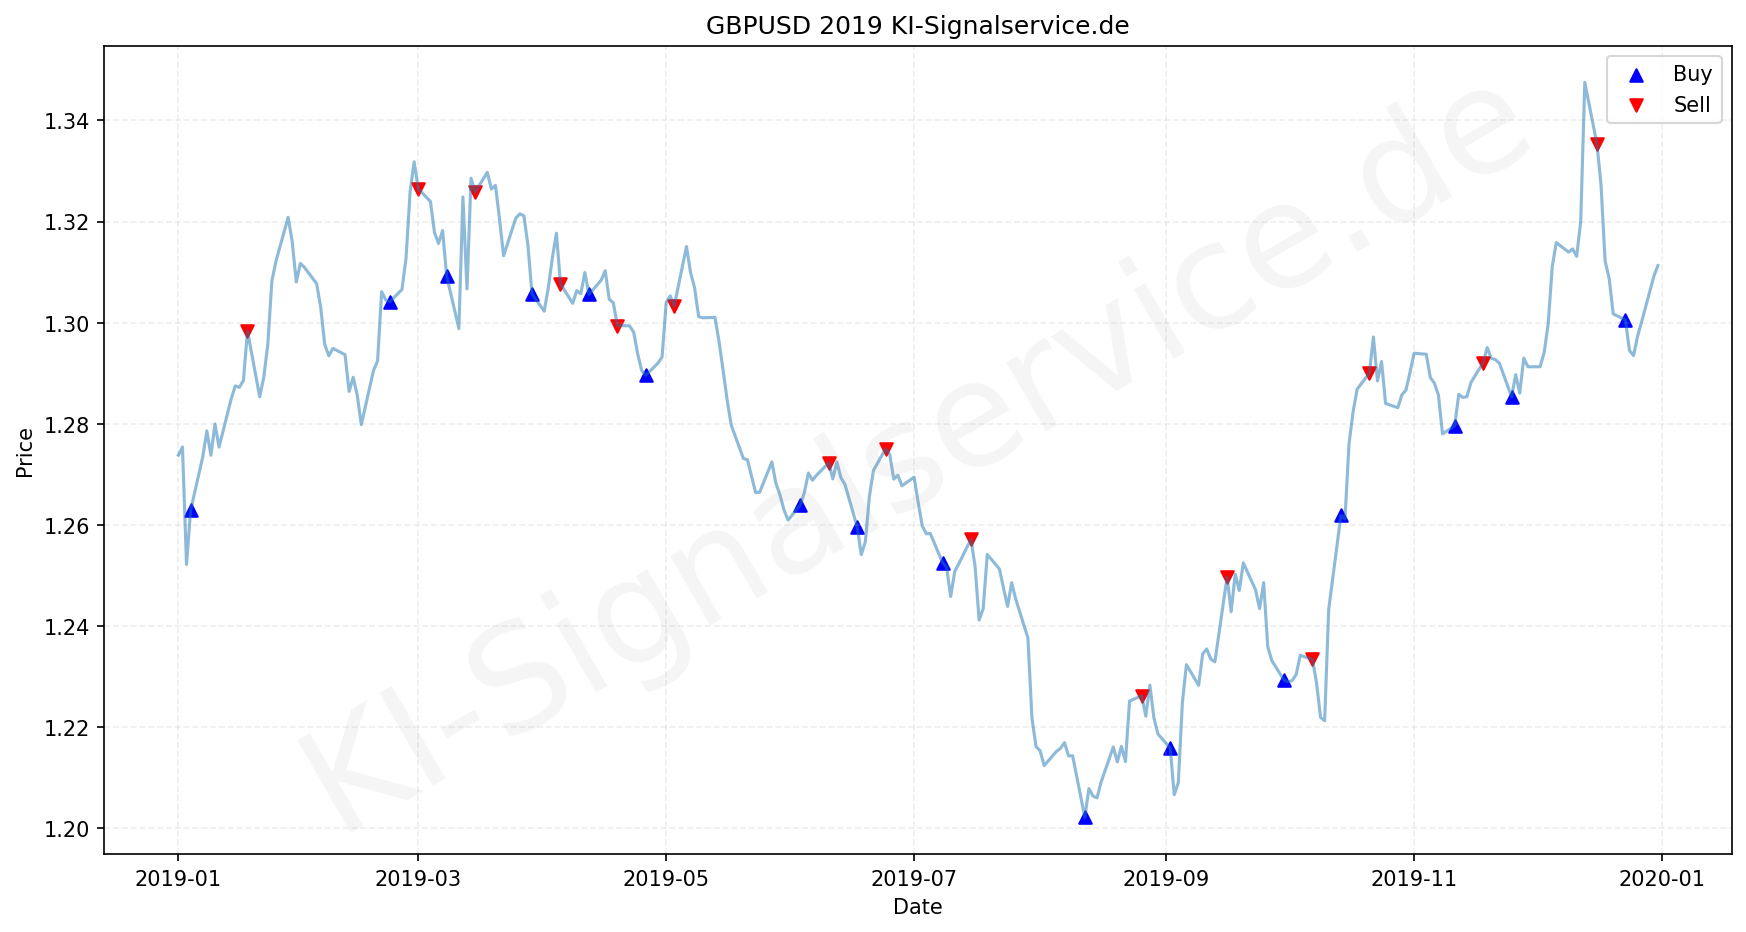 GBPUSD Chart - KI Tradingsignale 2019